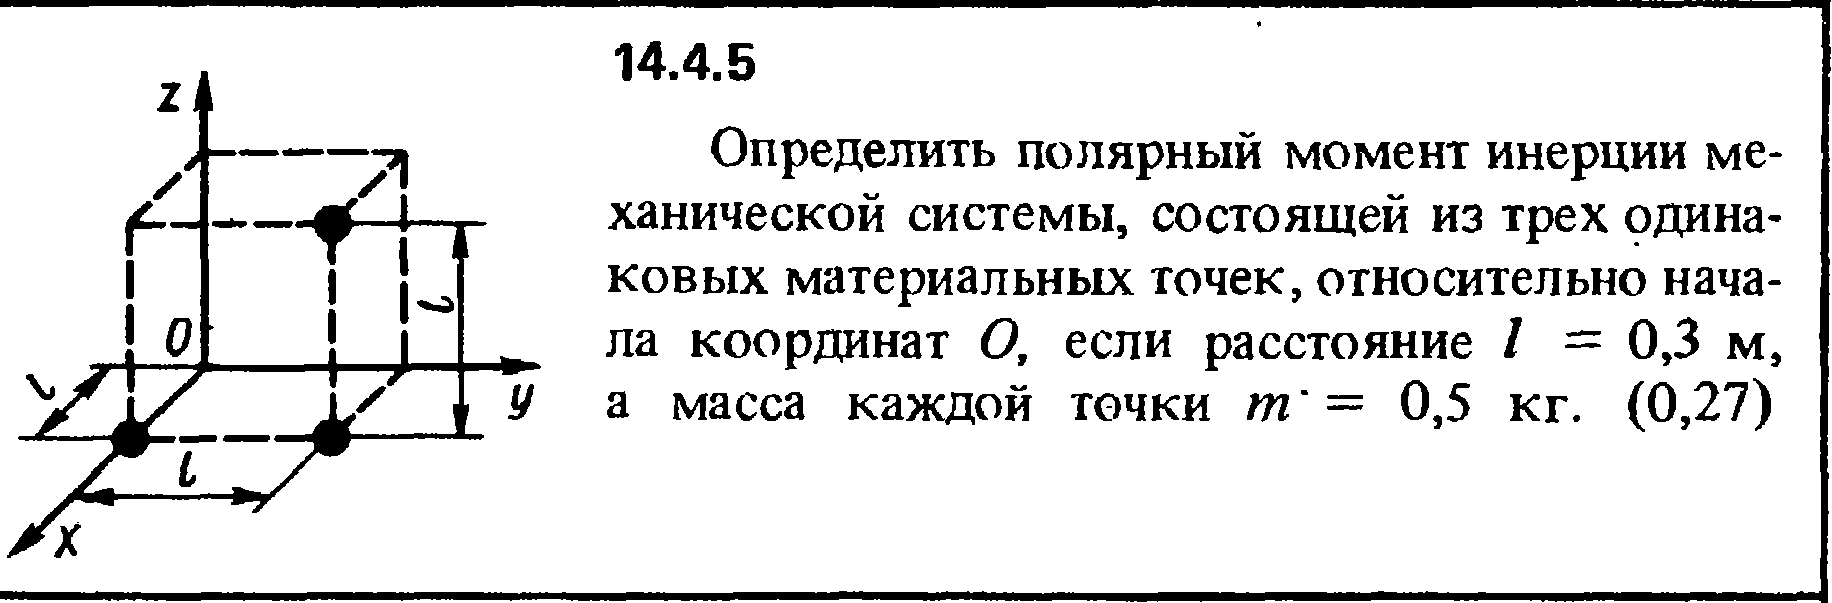 Решение задачи 14.4.5 из сборника Кепе О.Е. 1989 года